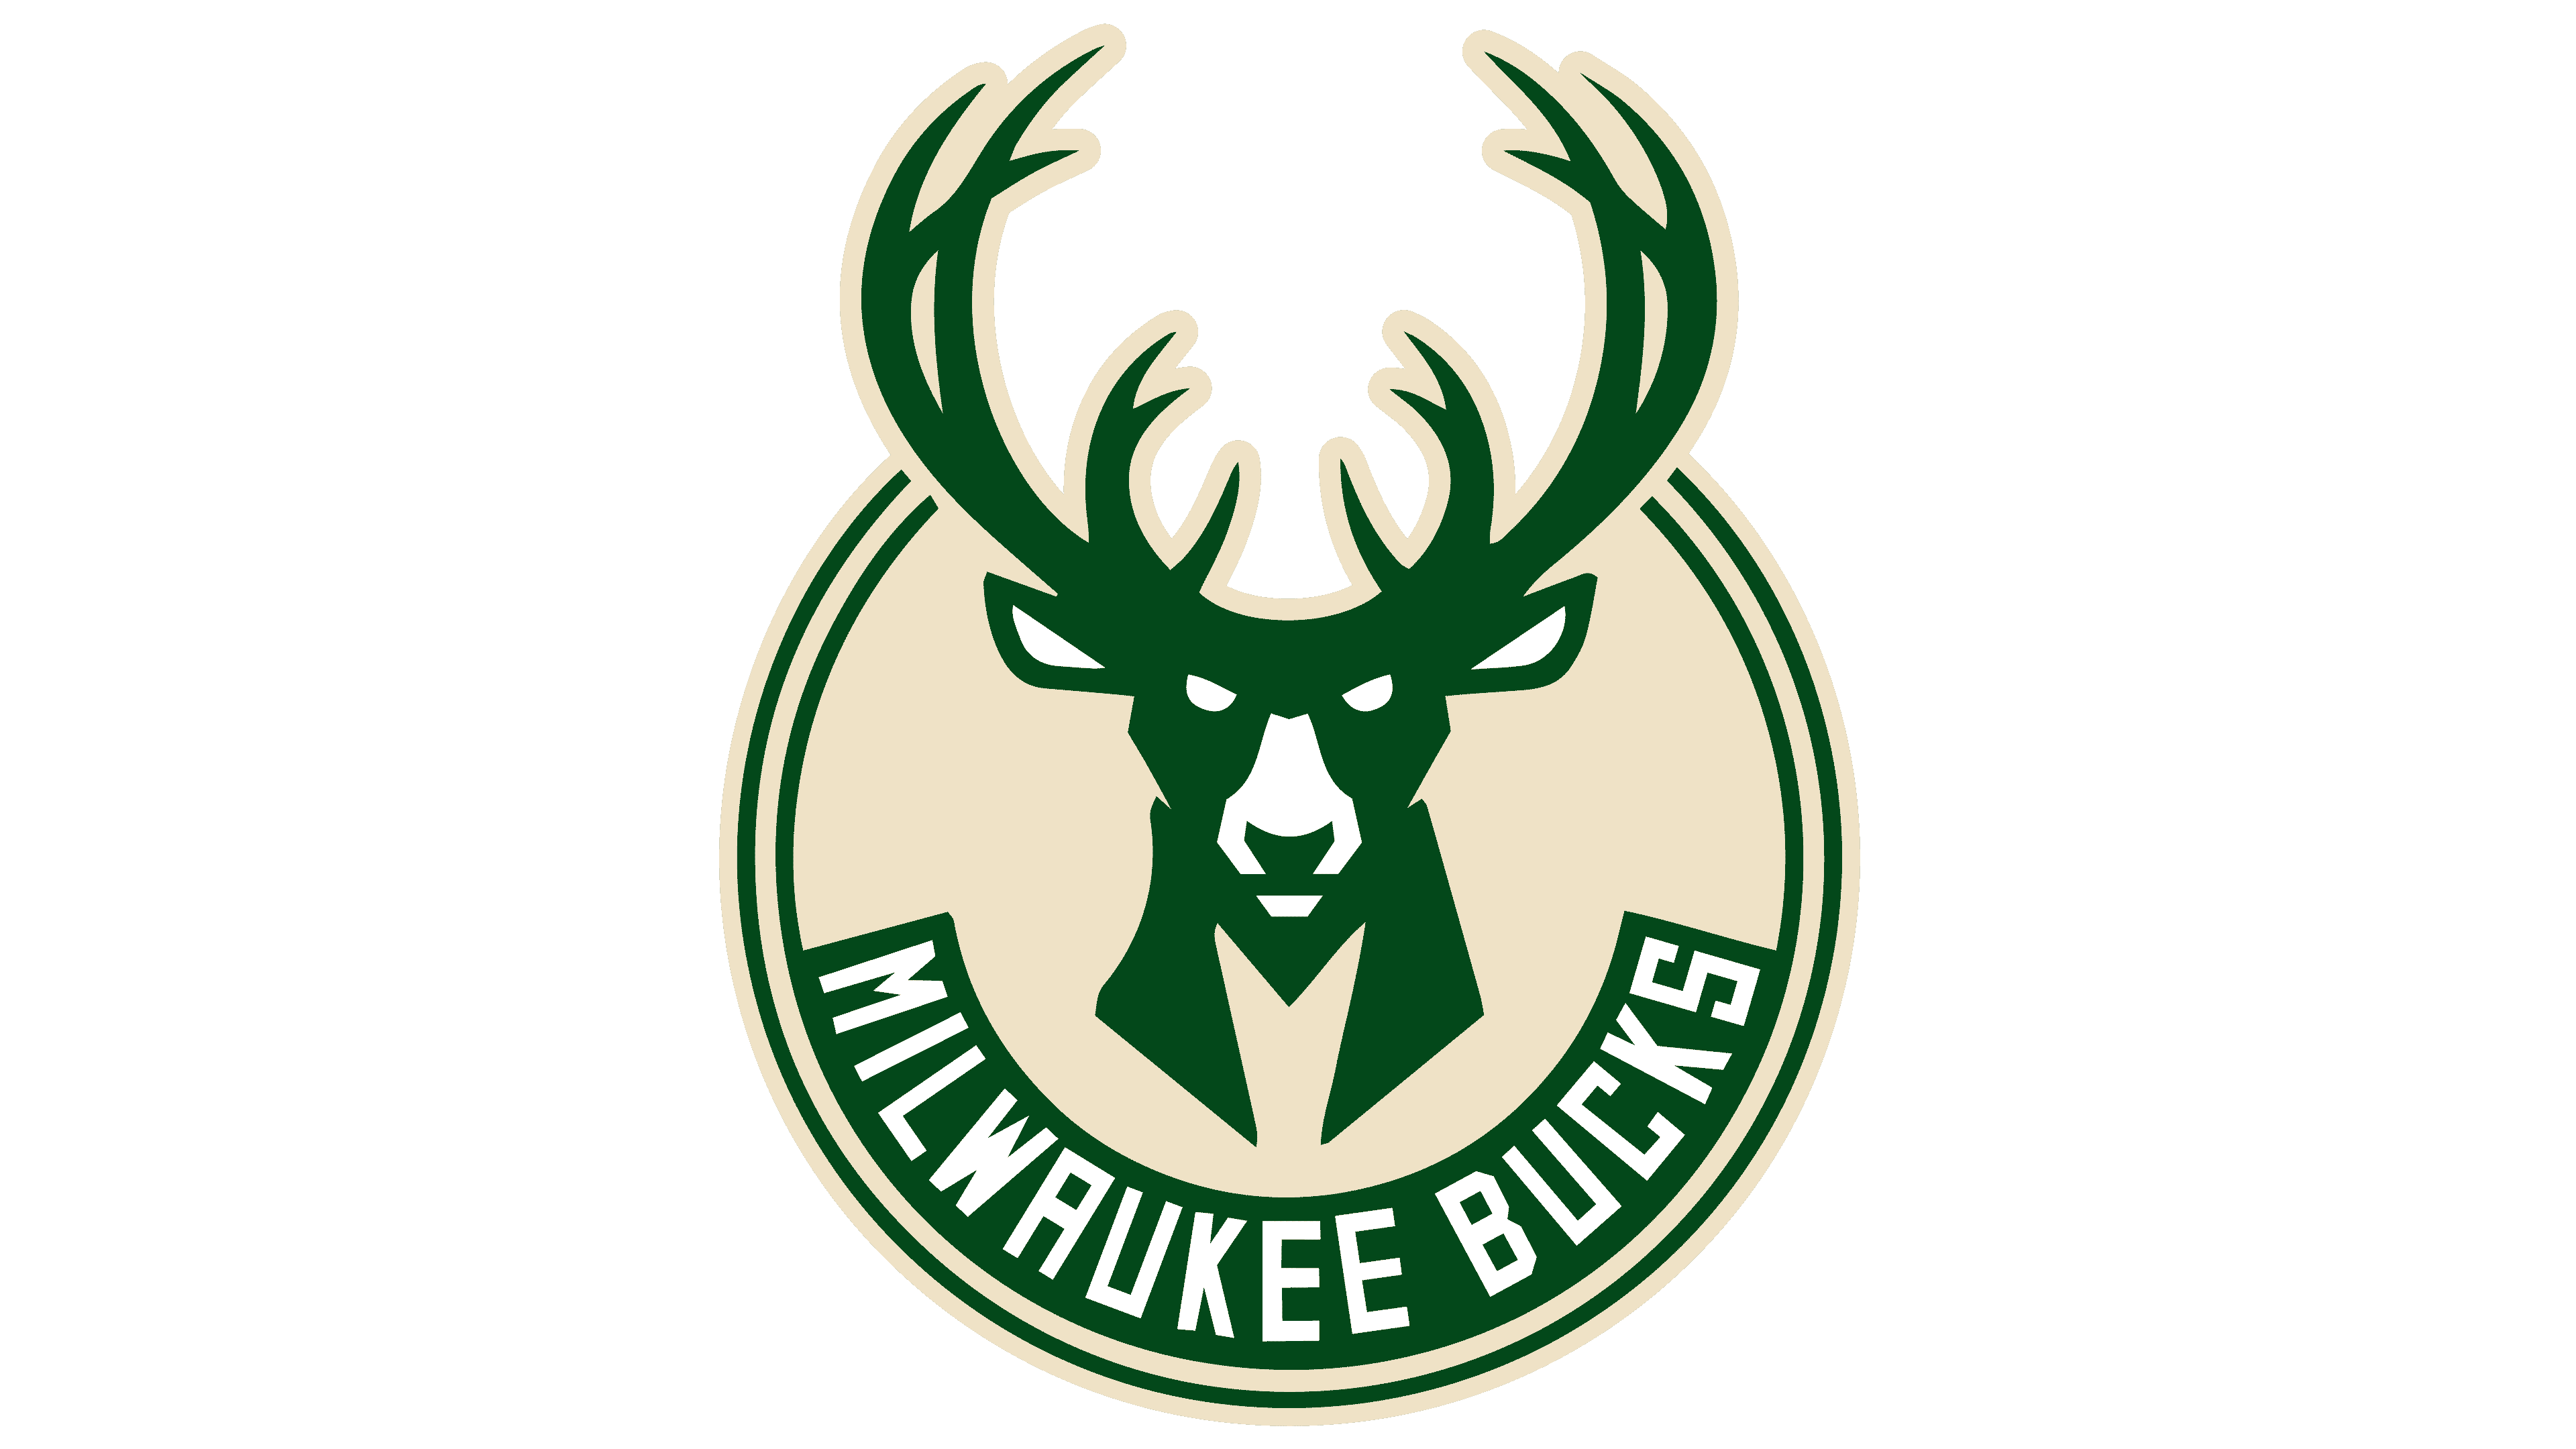 logo milwaukee bucks logo 2015 present